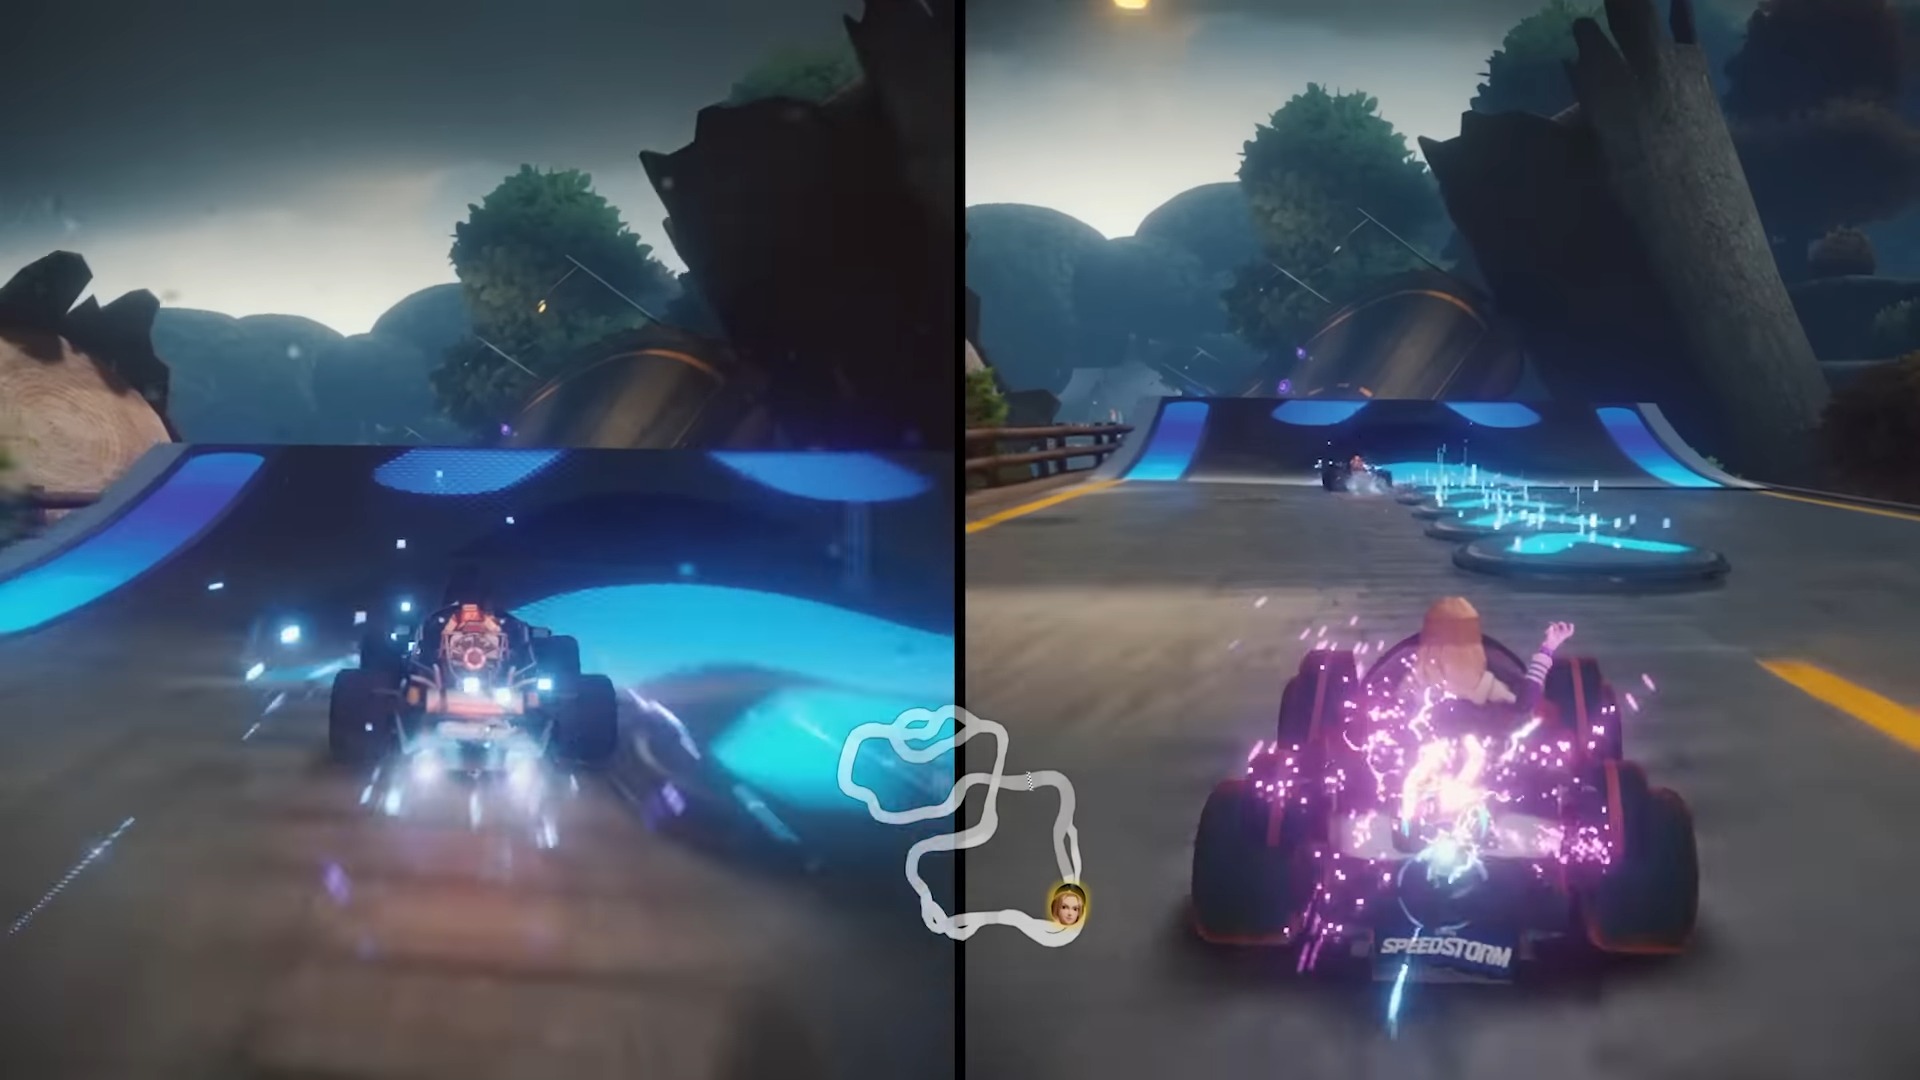 Disney Speedstorm Local Co-Op - How to Play in Split Screen - Droid Gamers